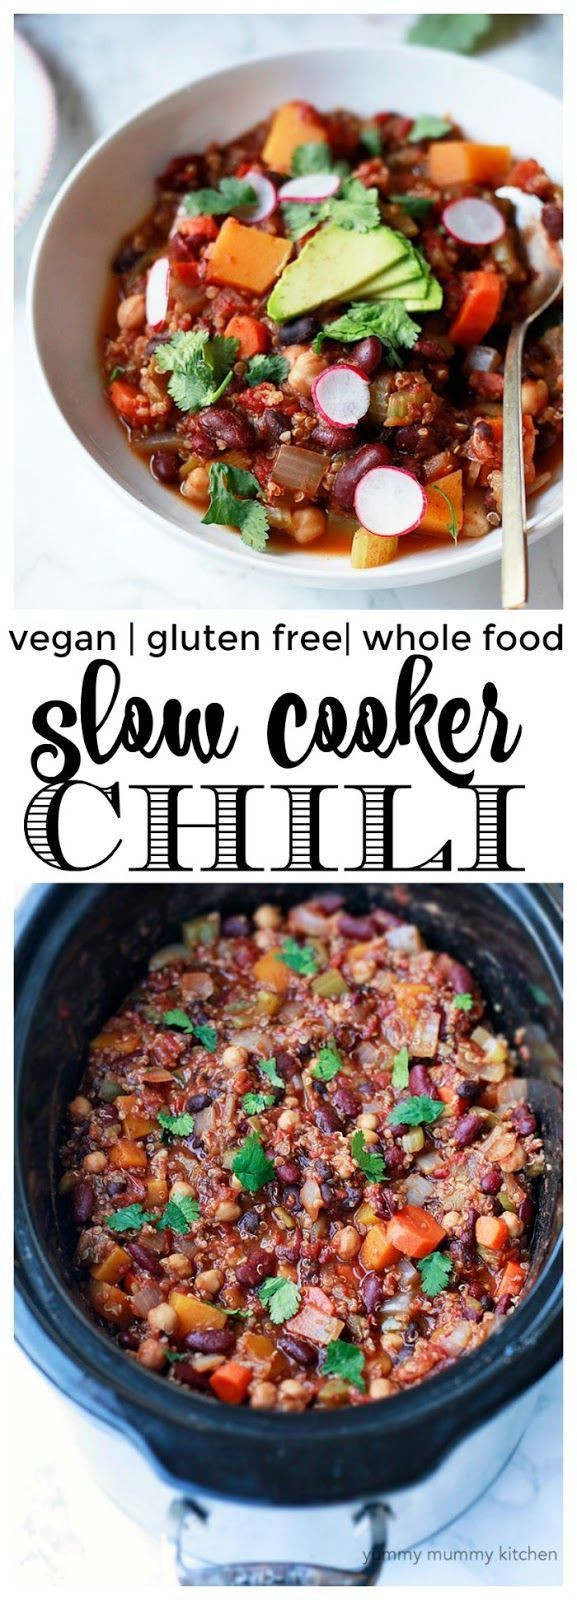 Easy Vegan Crockpot Recipes
 Easy vegan slow cooker chili recipe with quinoa beans